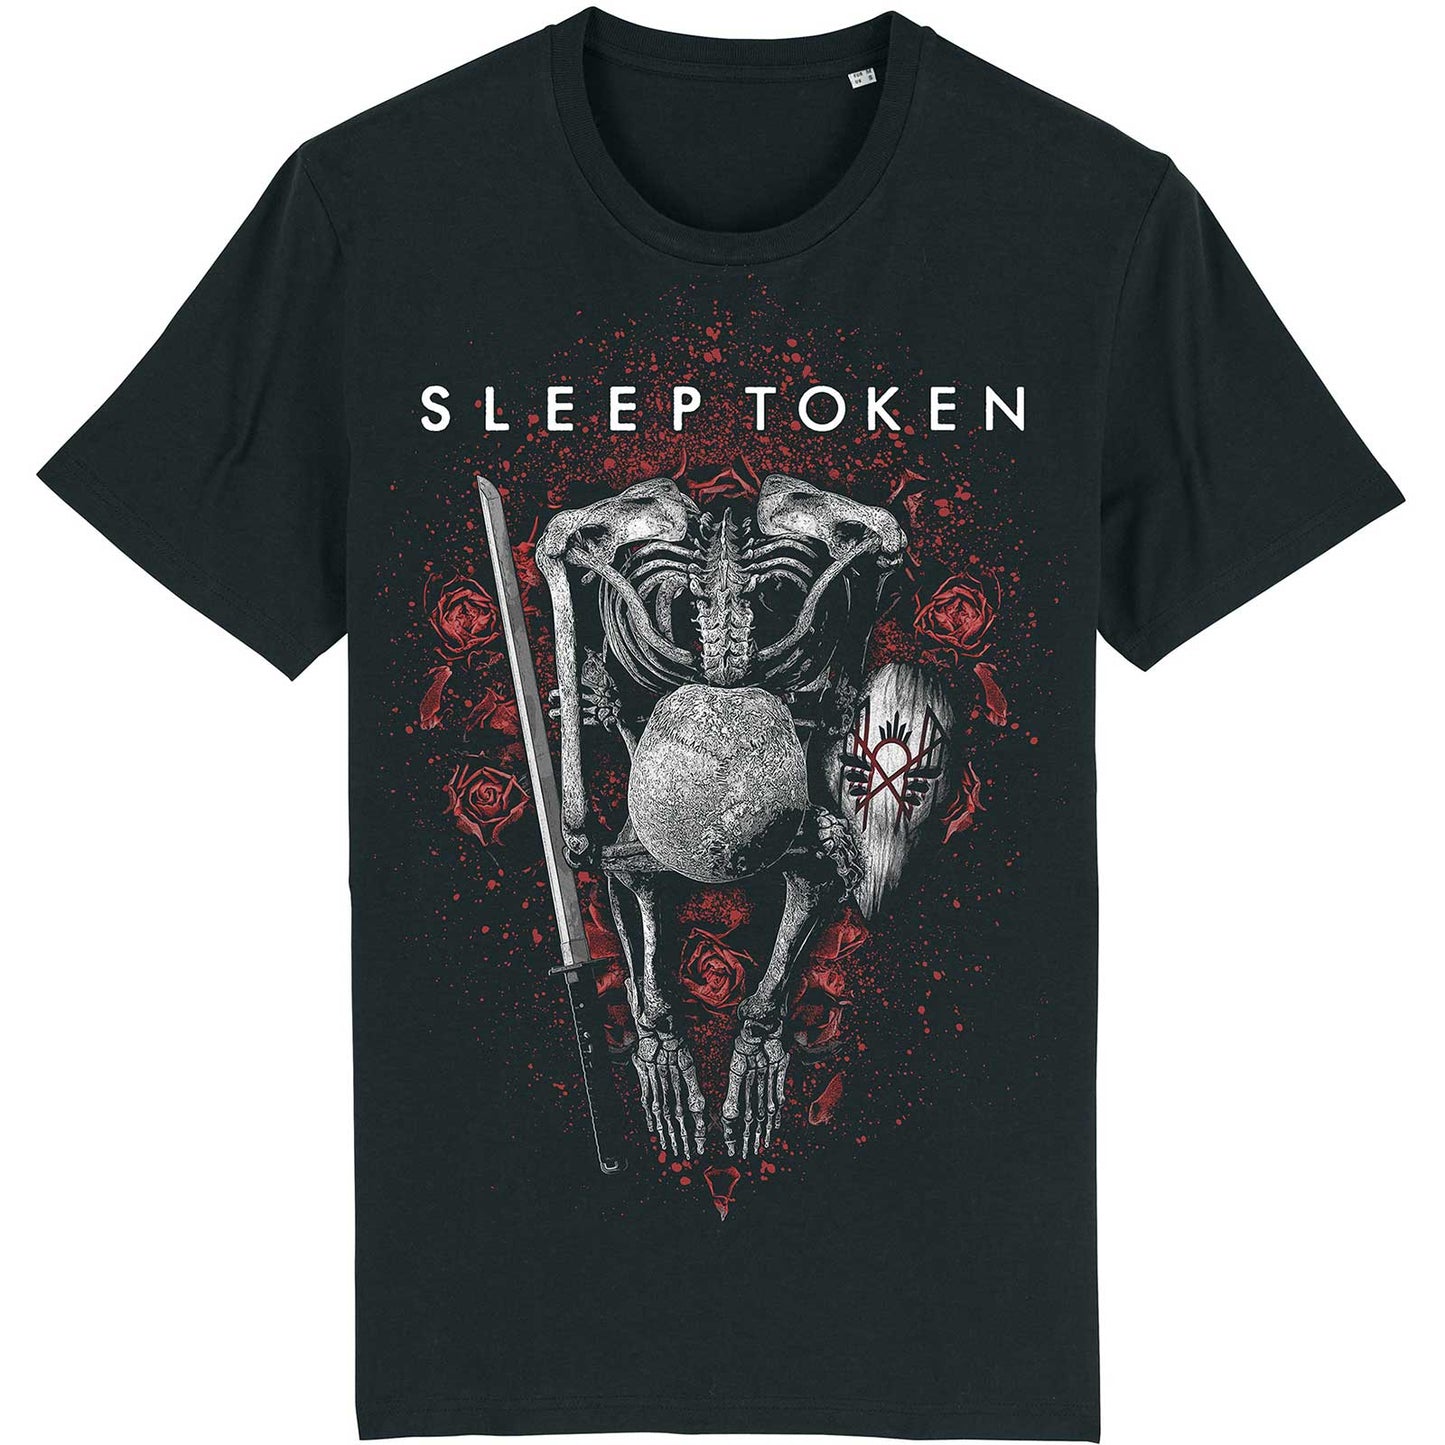 SLEEP TOKEN - The Love You Want Skeleton T-Shirt